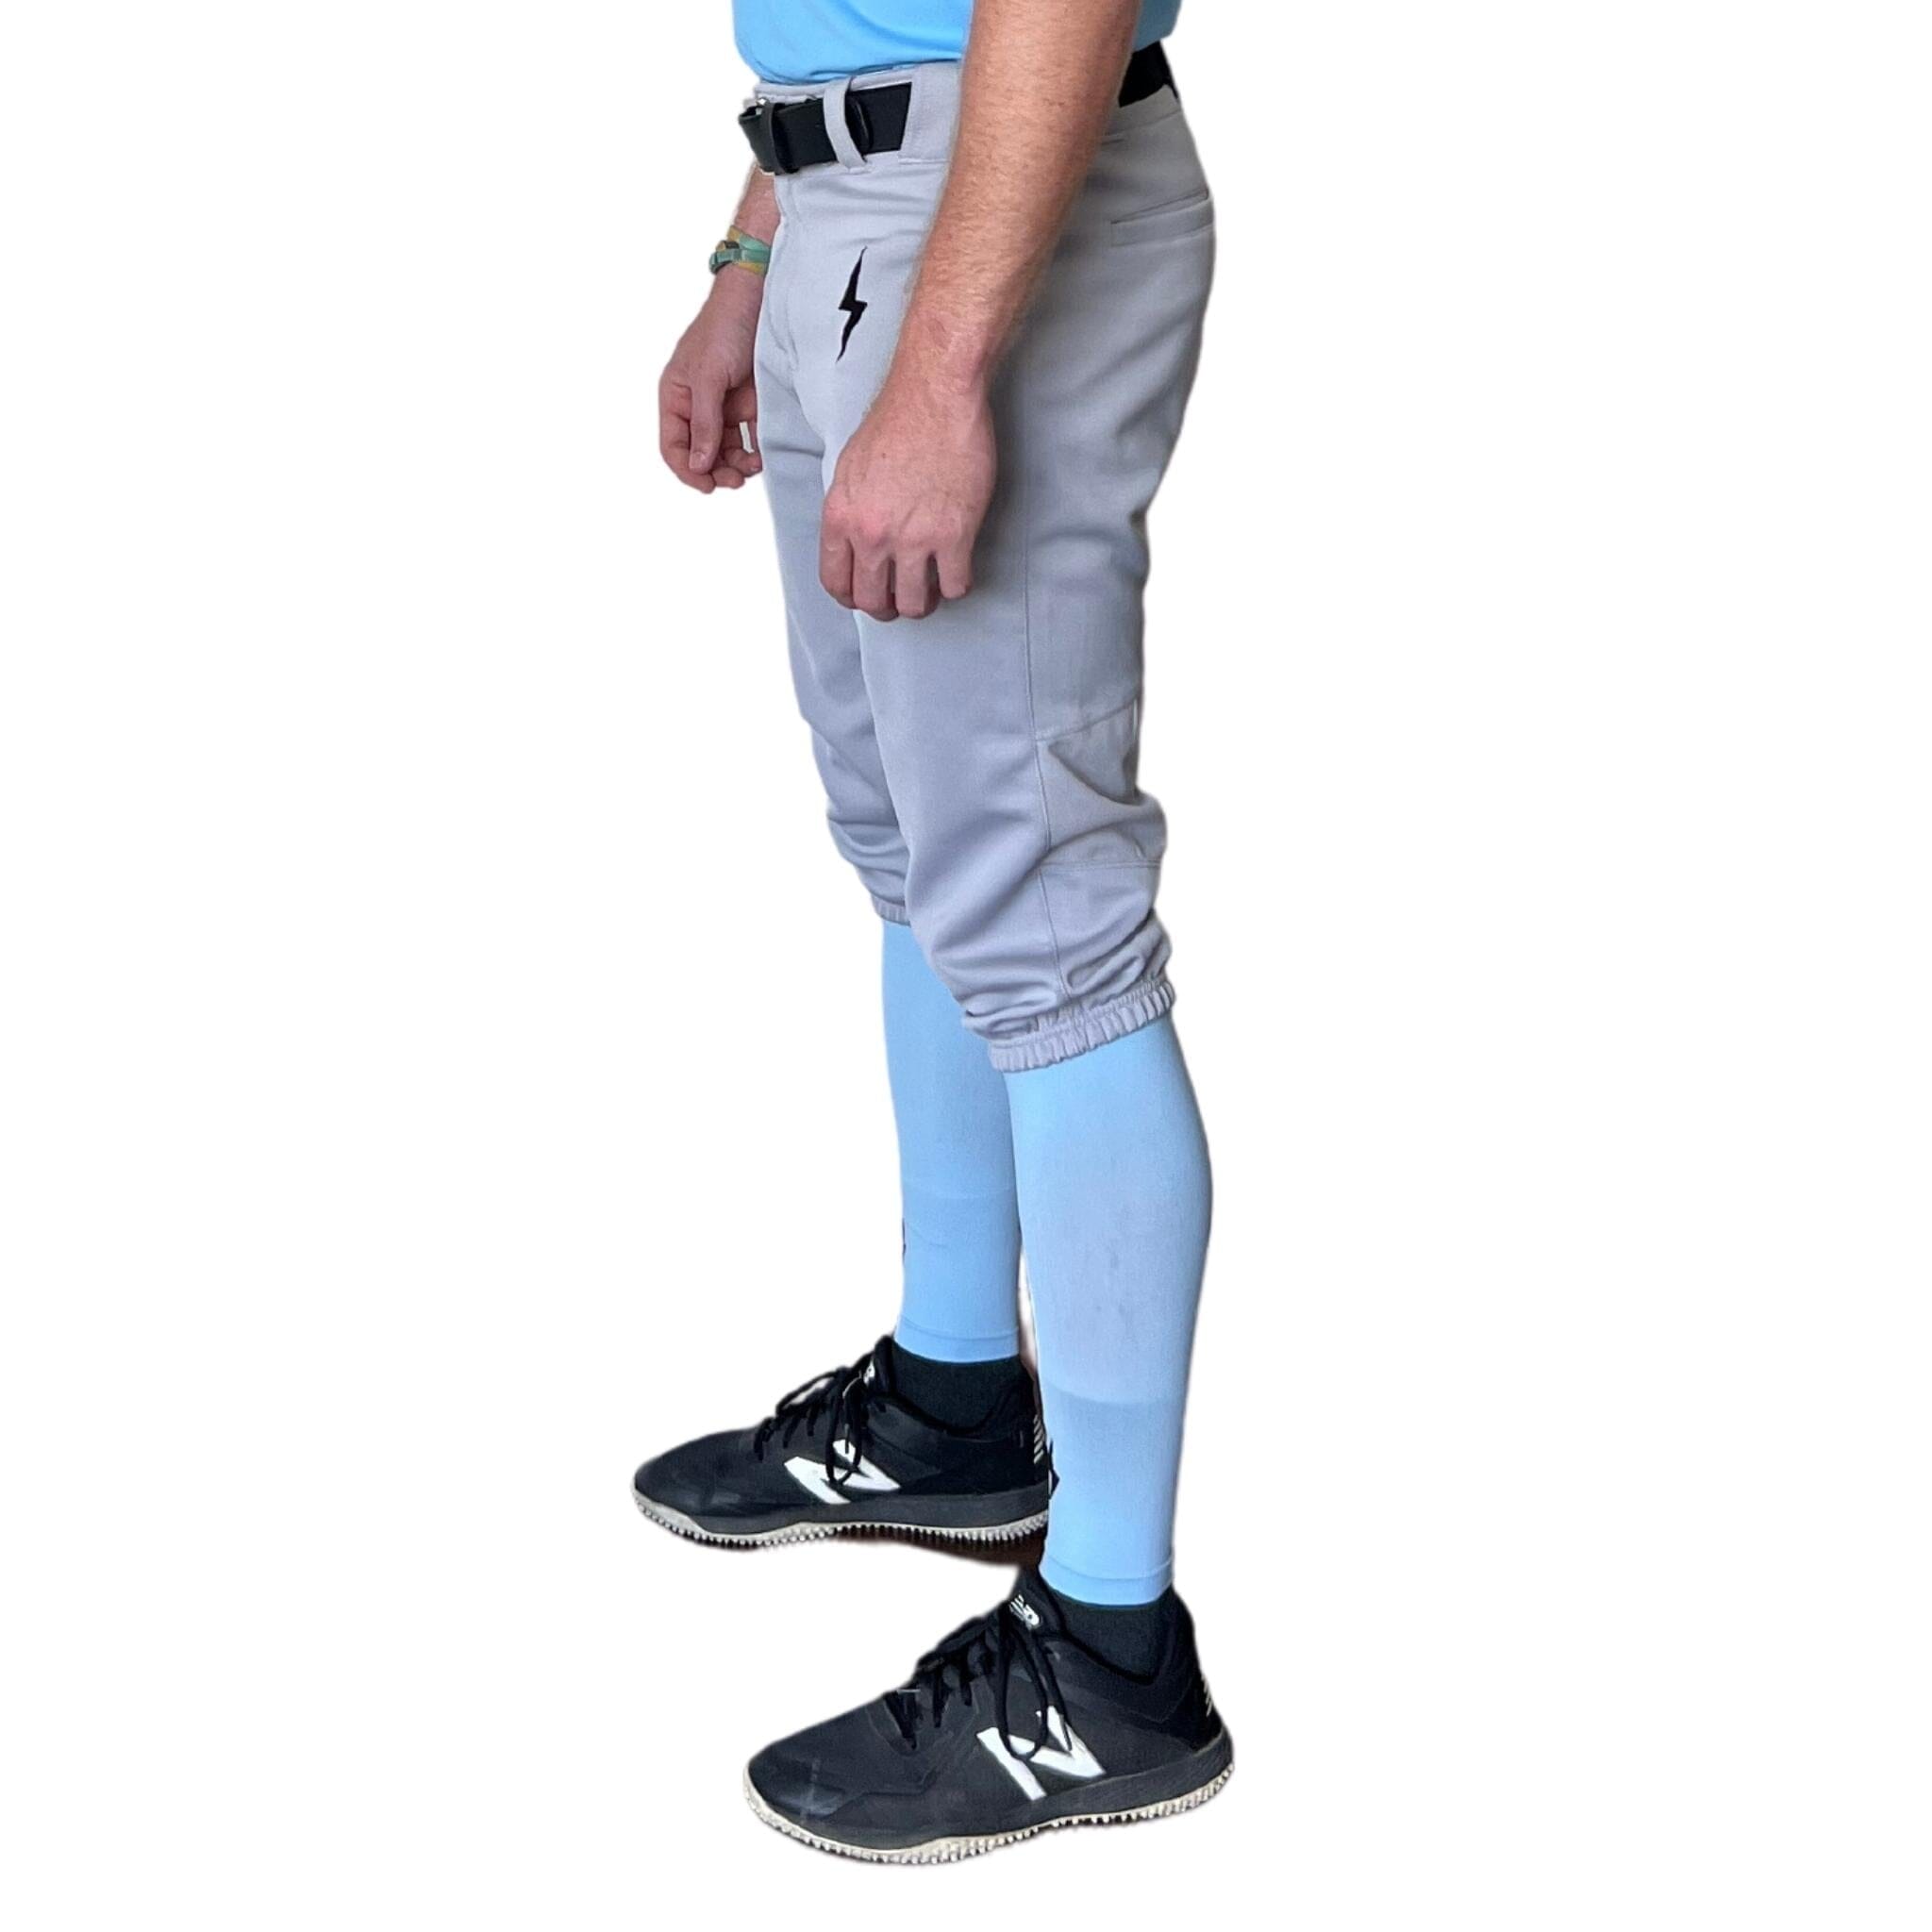 Louisville Slugger Men's Slugger Player's Boot-Cut Baseball Pants, Gray 